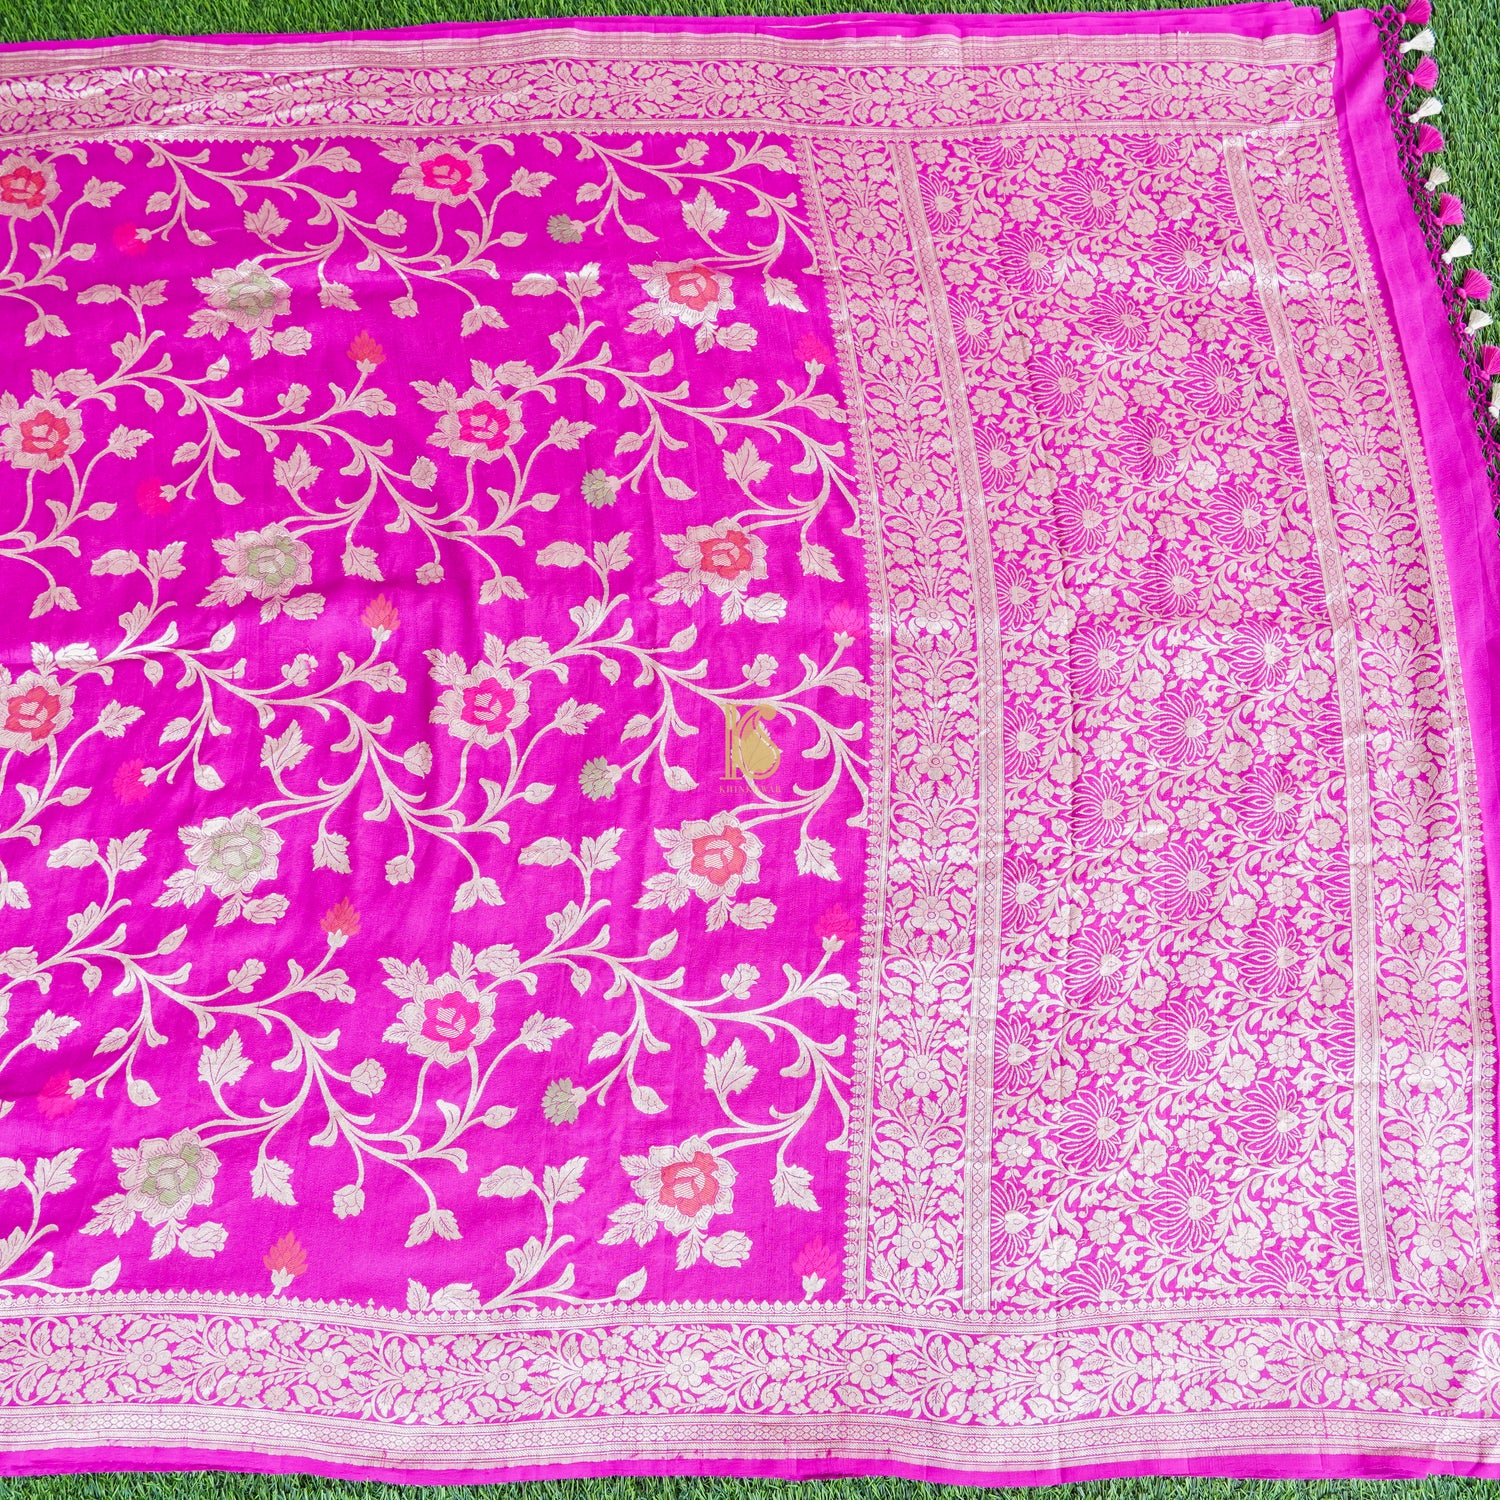 Handloom Banarasi Tussar Silk Purple Meenakari Saree - Khinkhwab